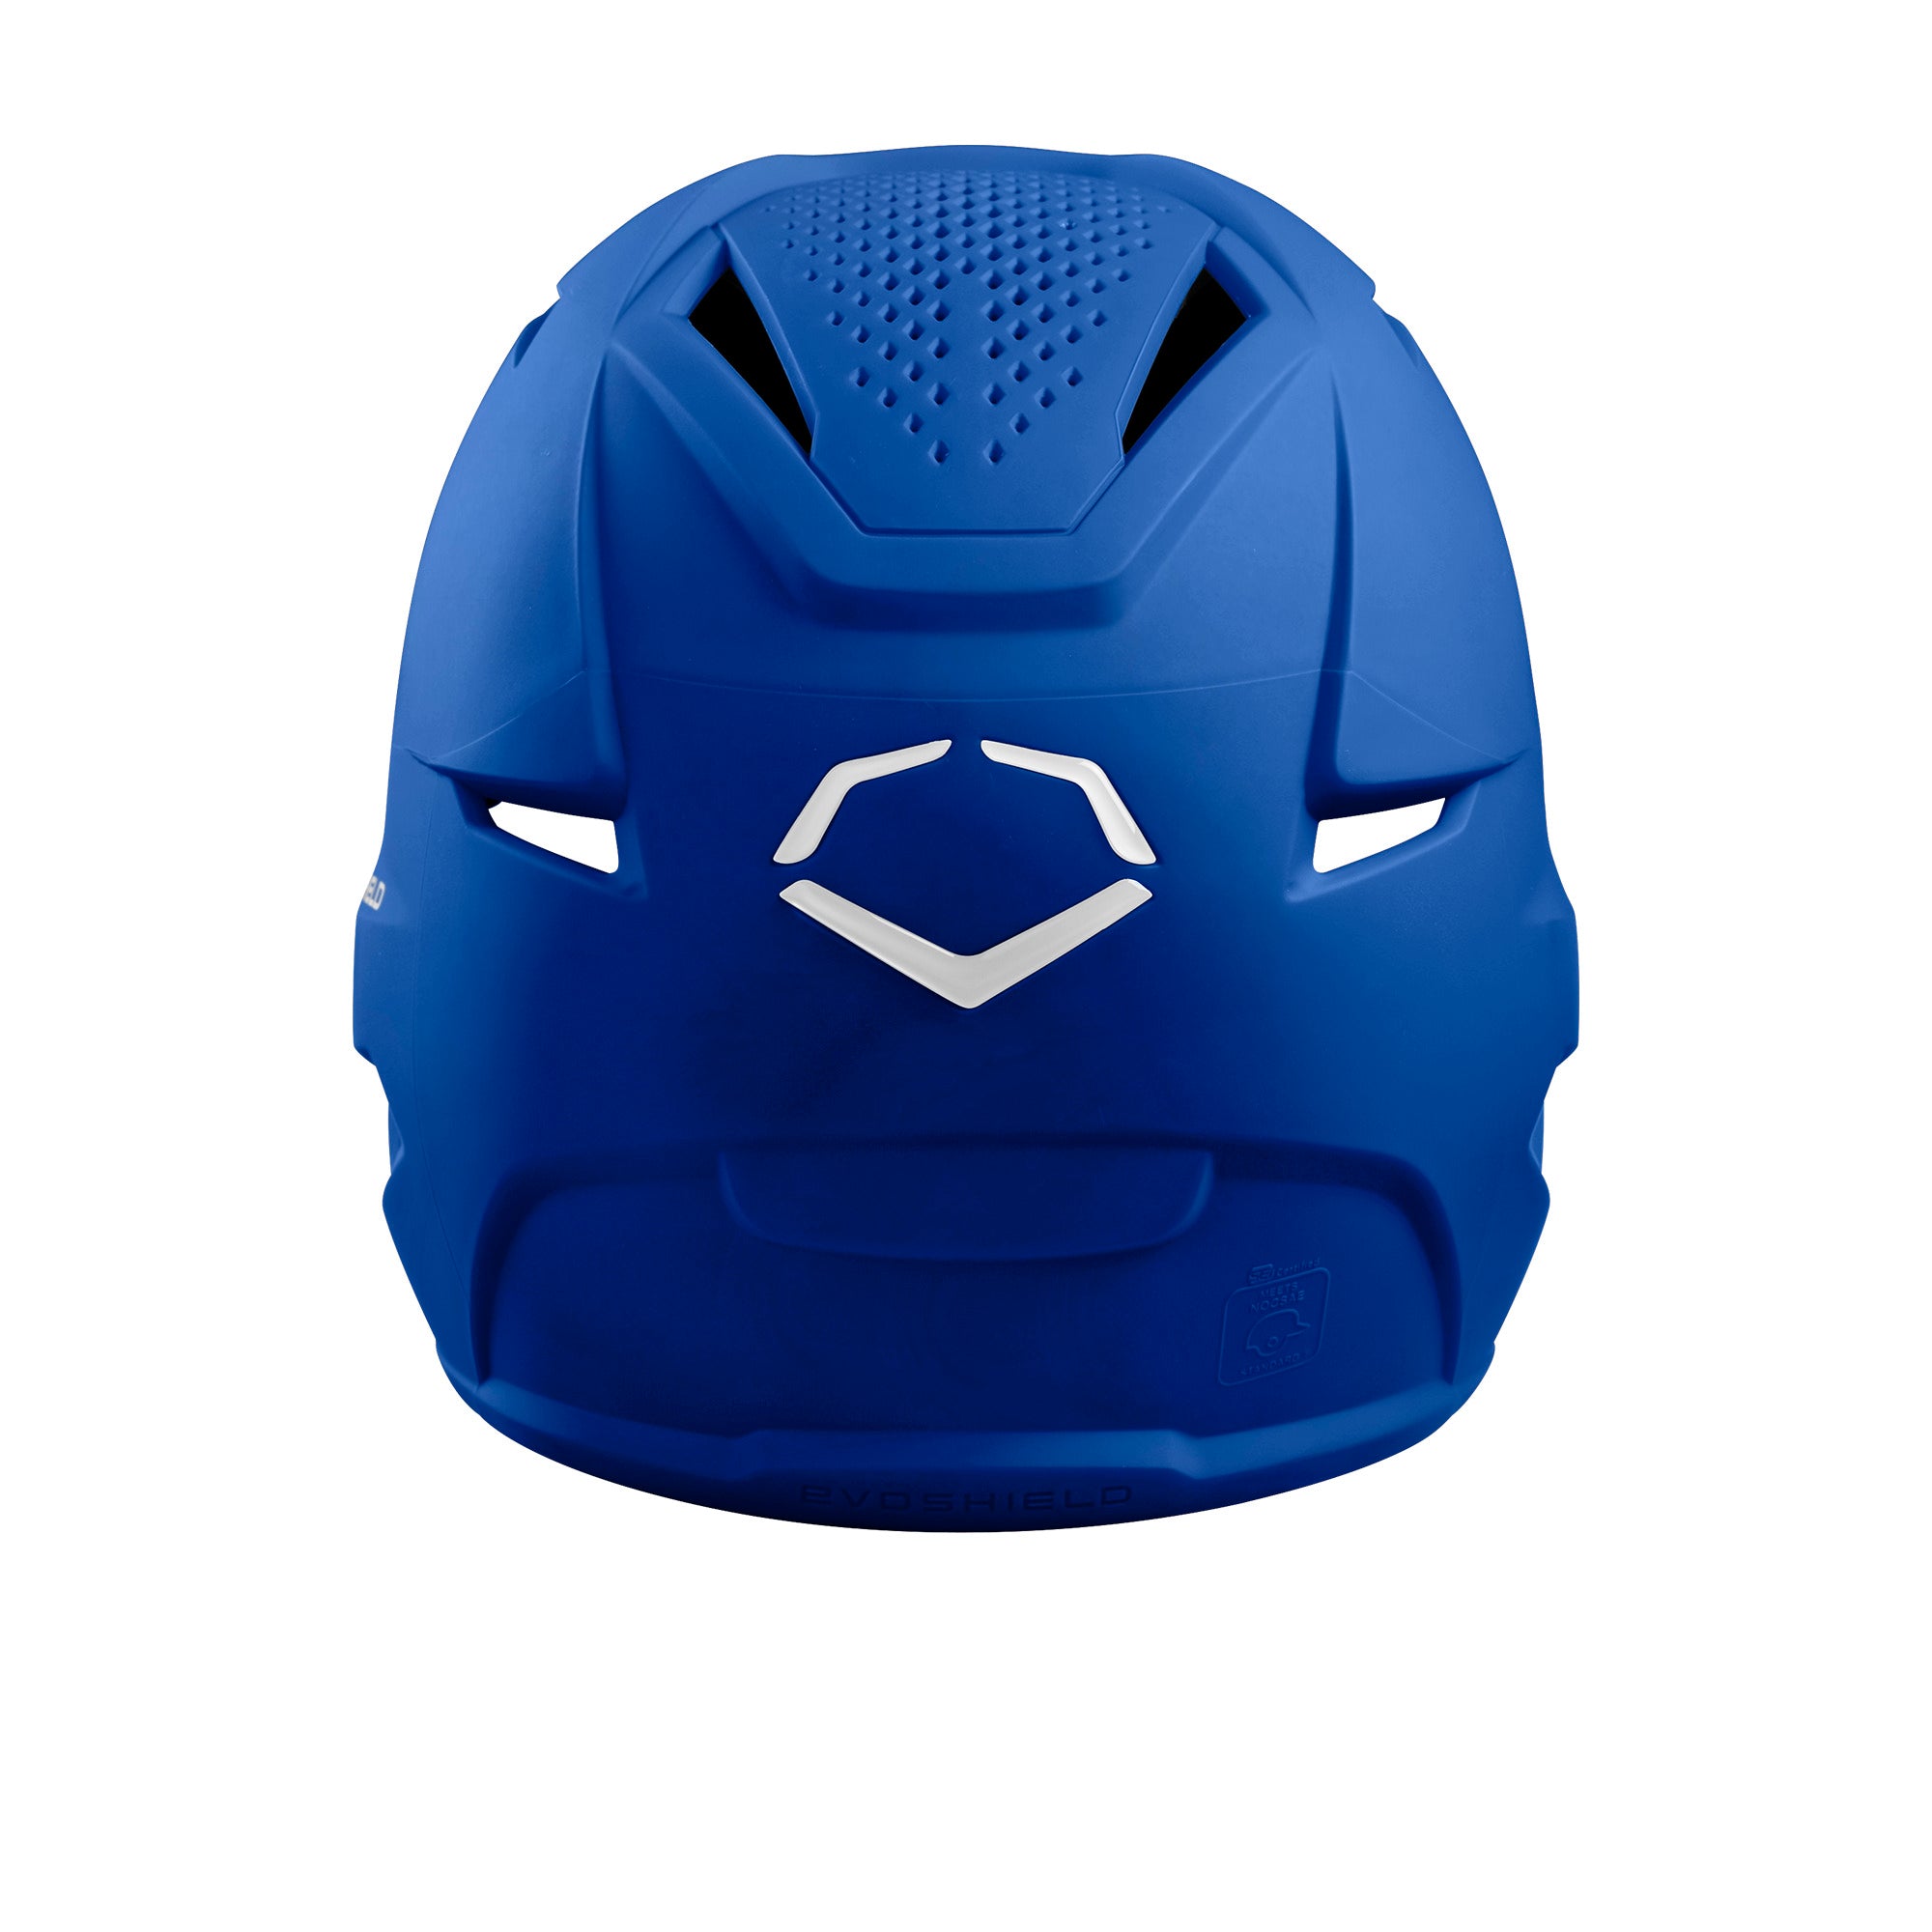 Evoshield XVT Batting Helmet - Matte Finish Royal